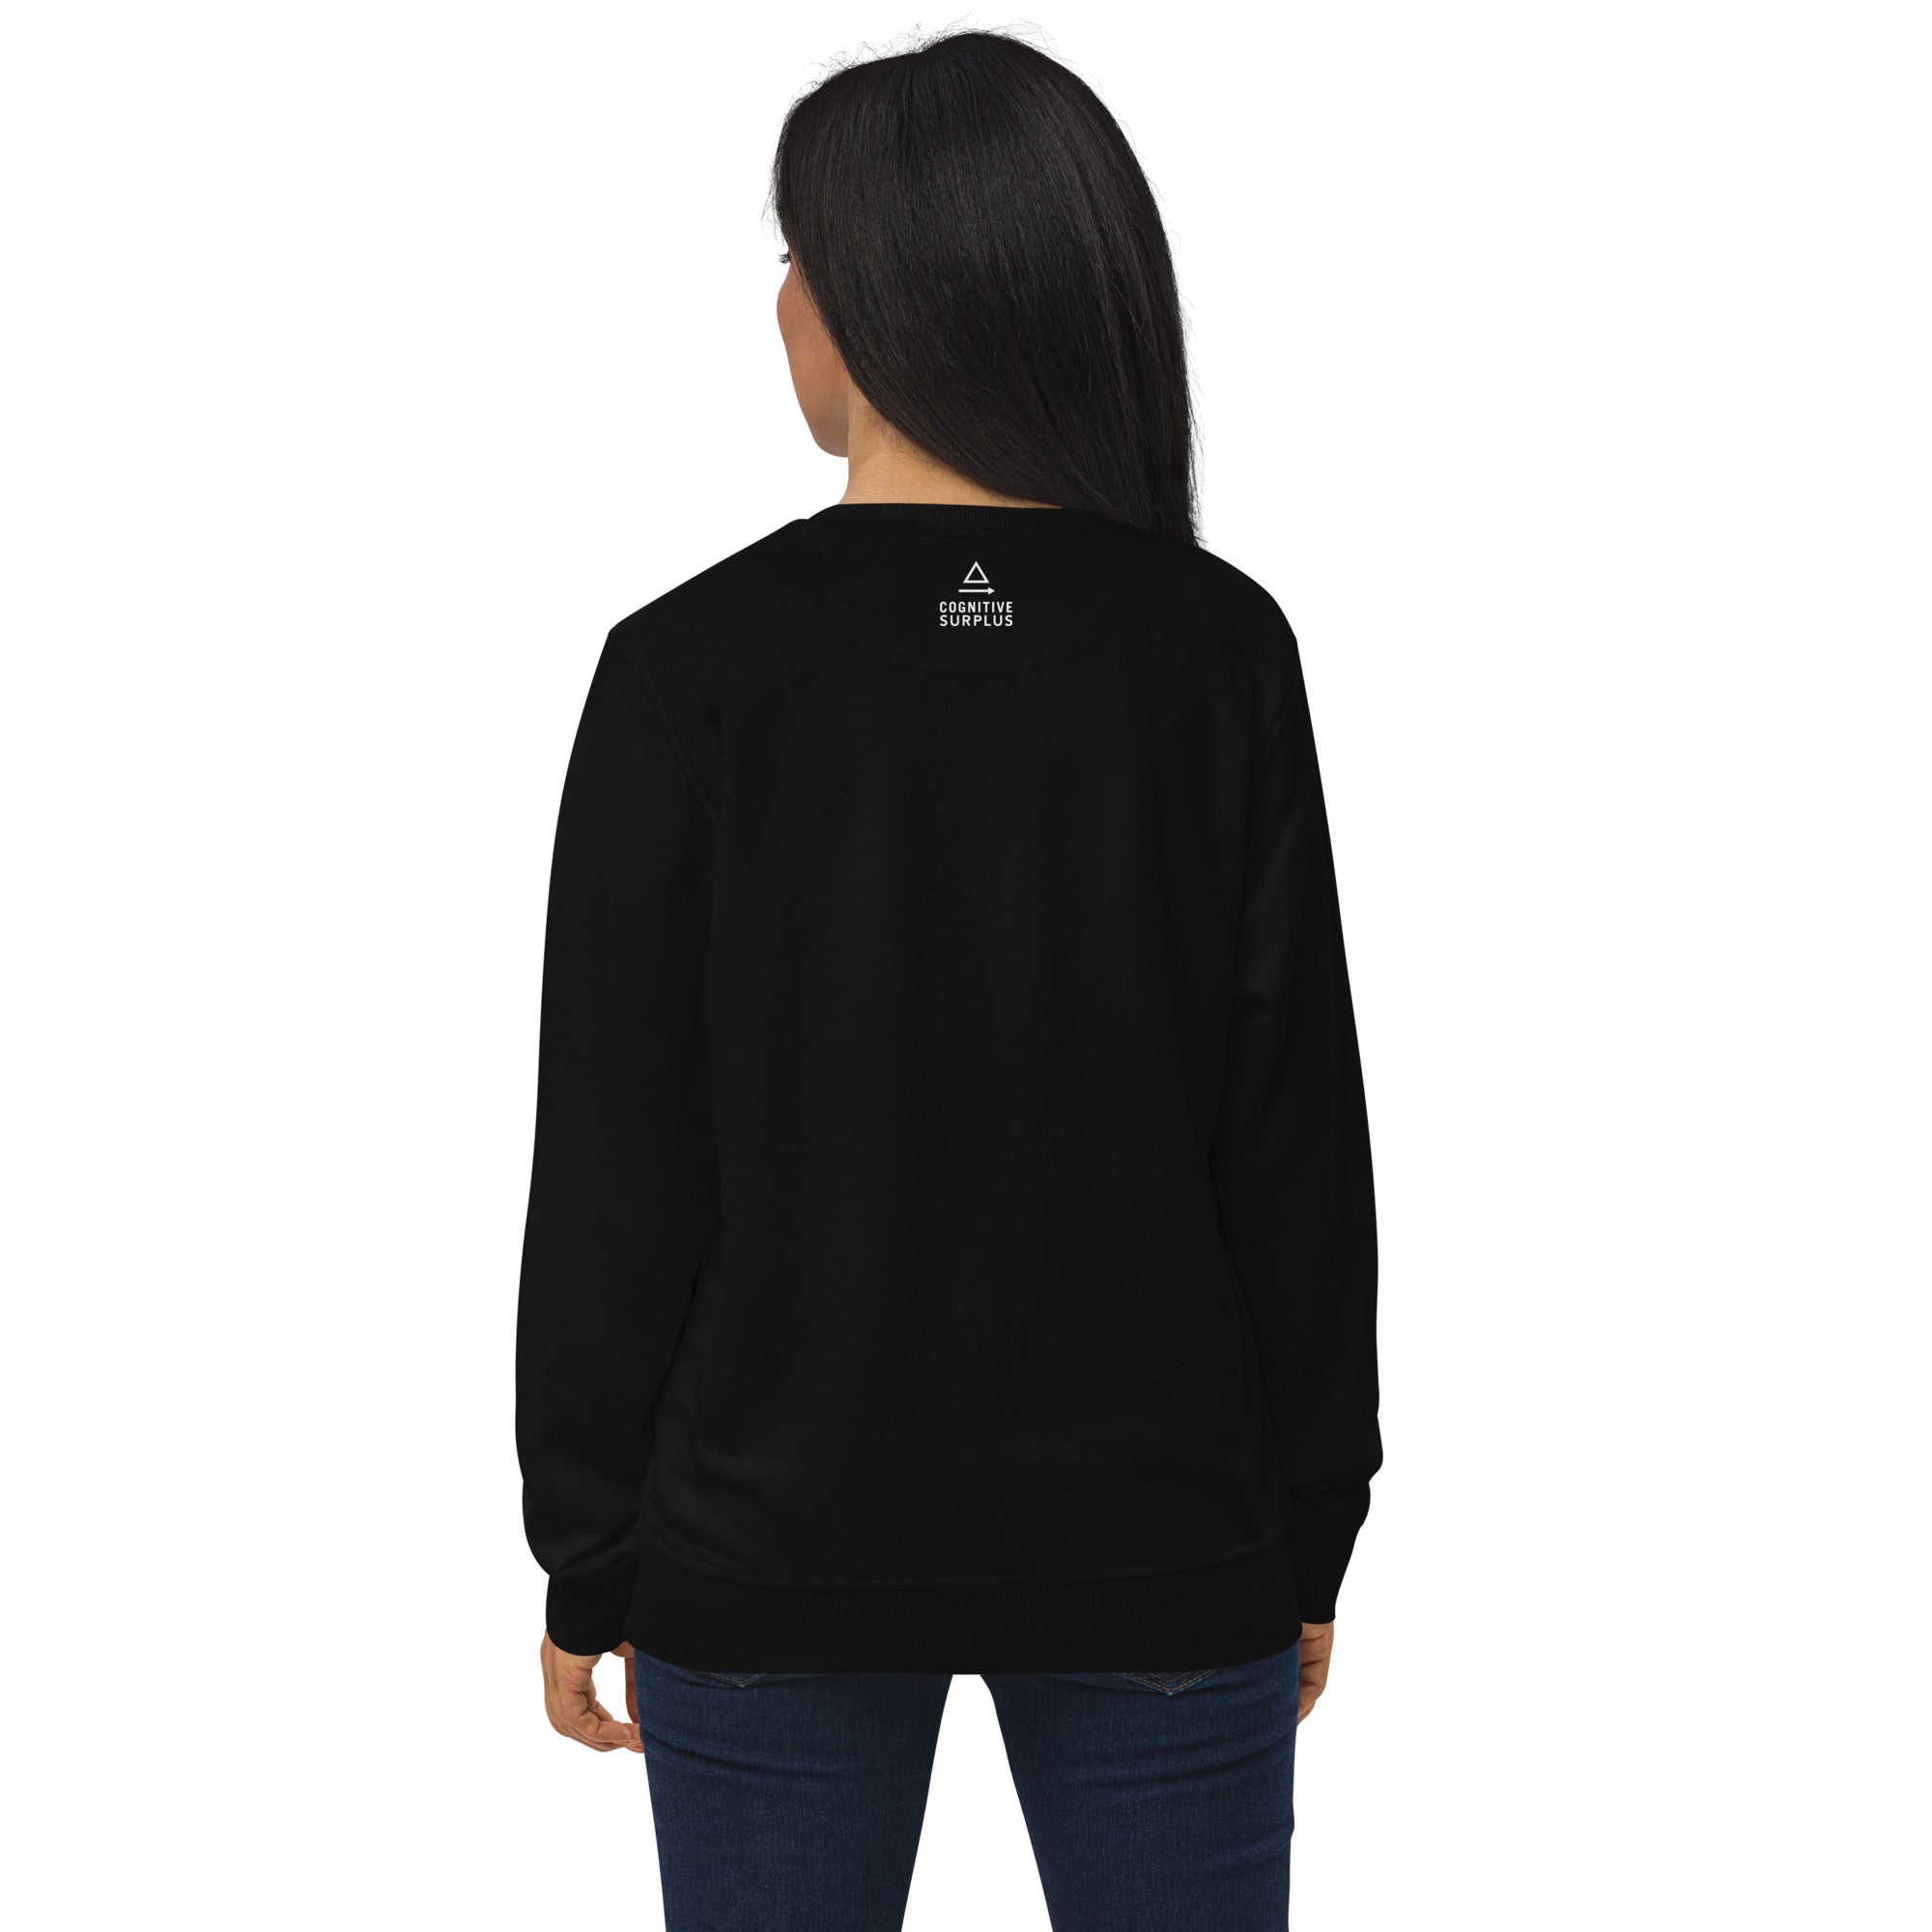 unisex-organic-sweatshirt-black-back-6570cdc8e69c0.jpg